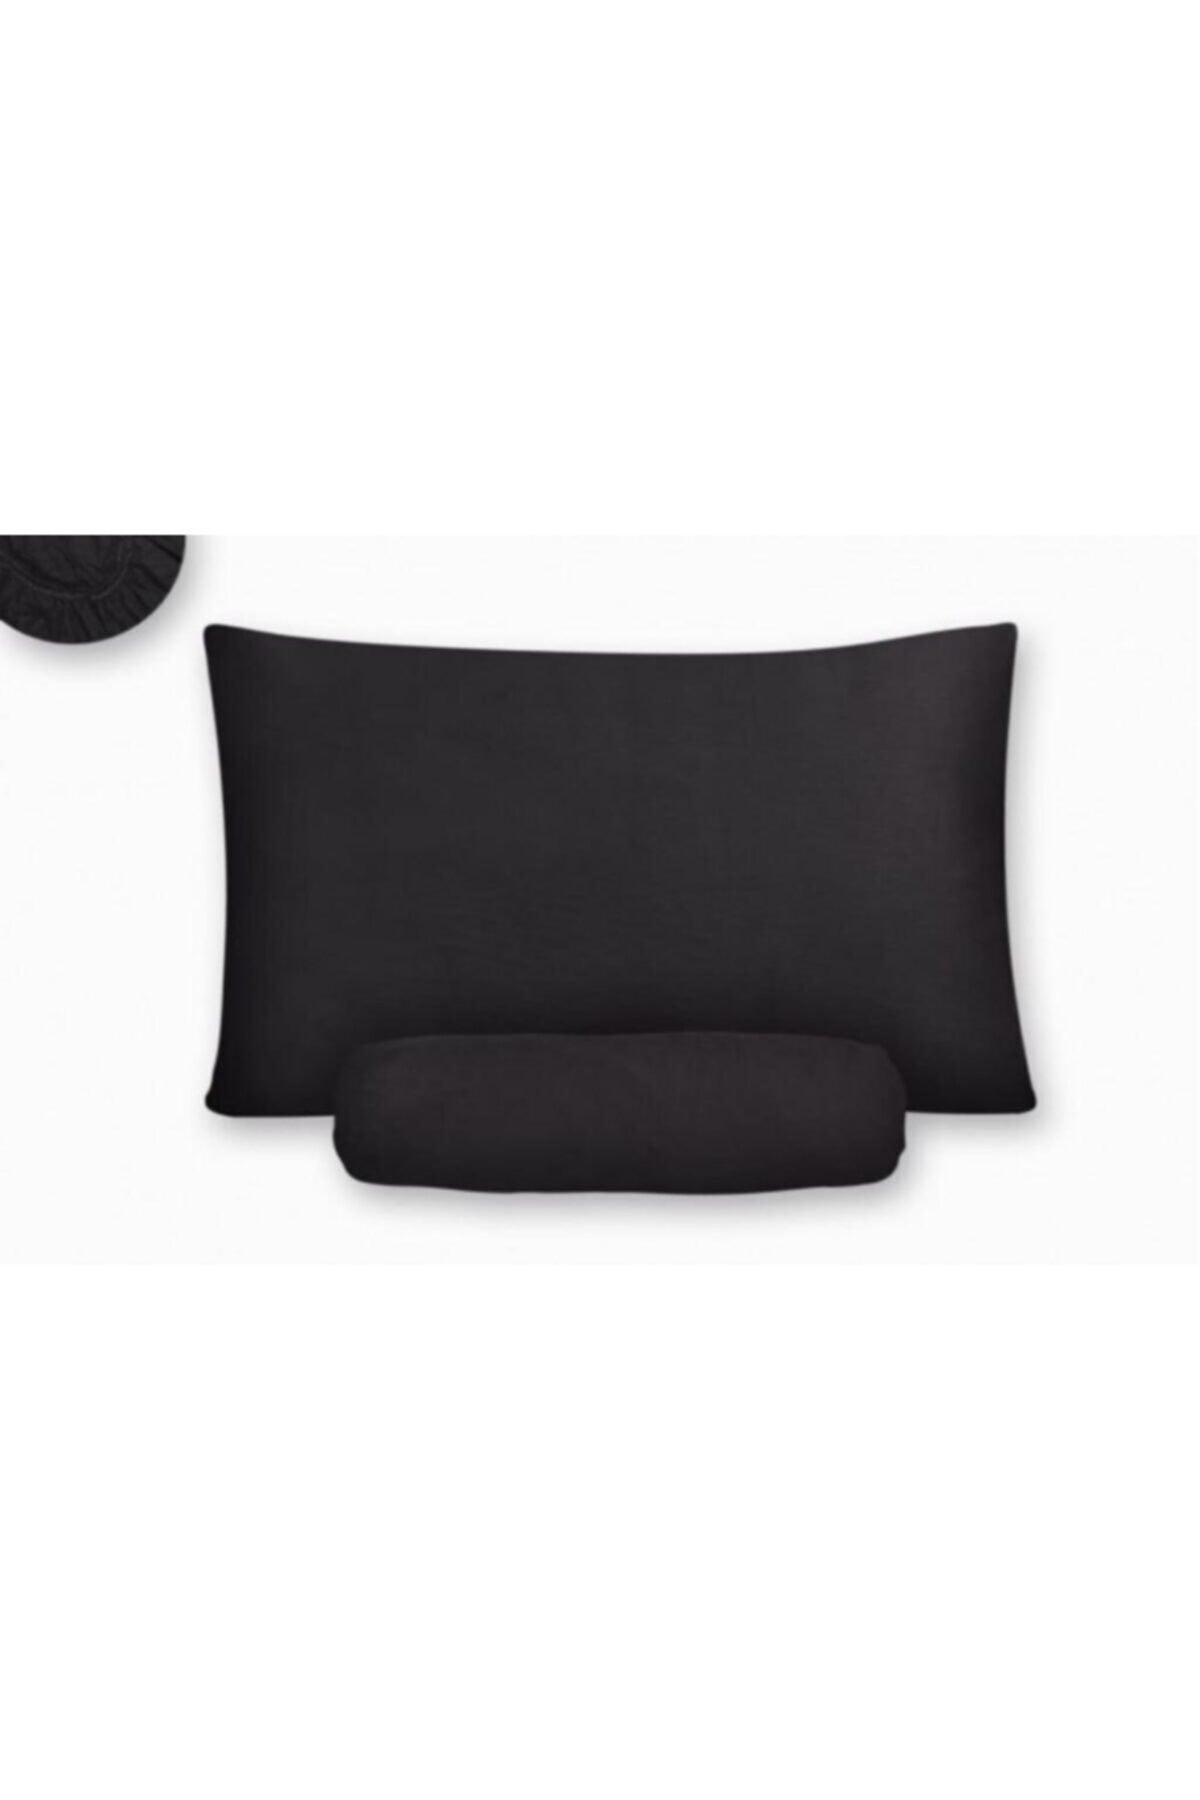 Black Fabric Single Elastic Bed Sheet Set - Swordslife